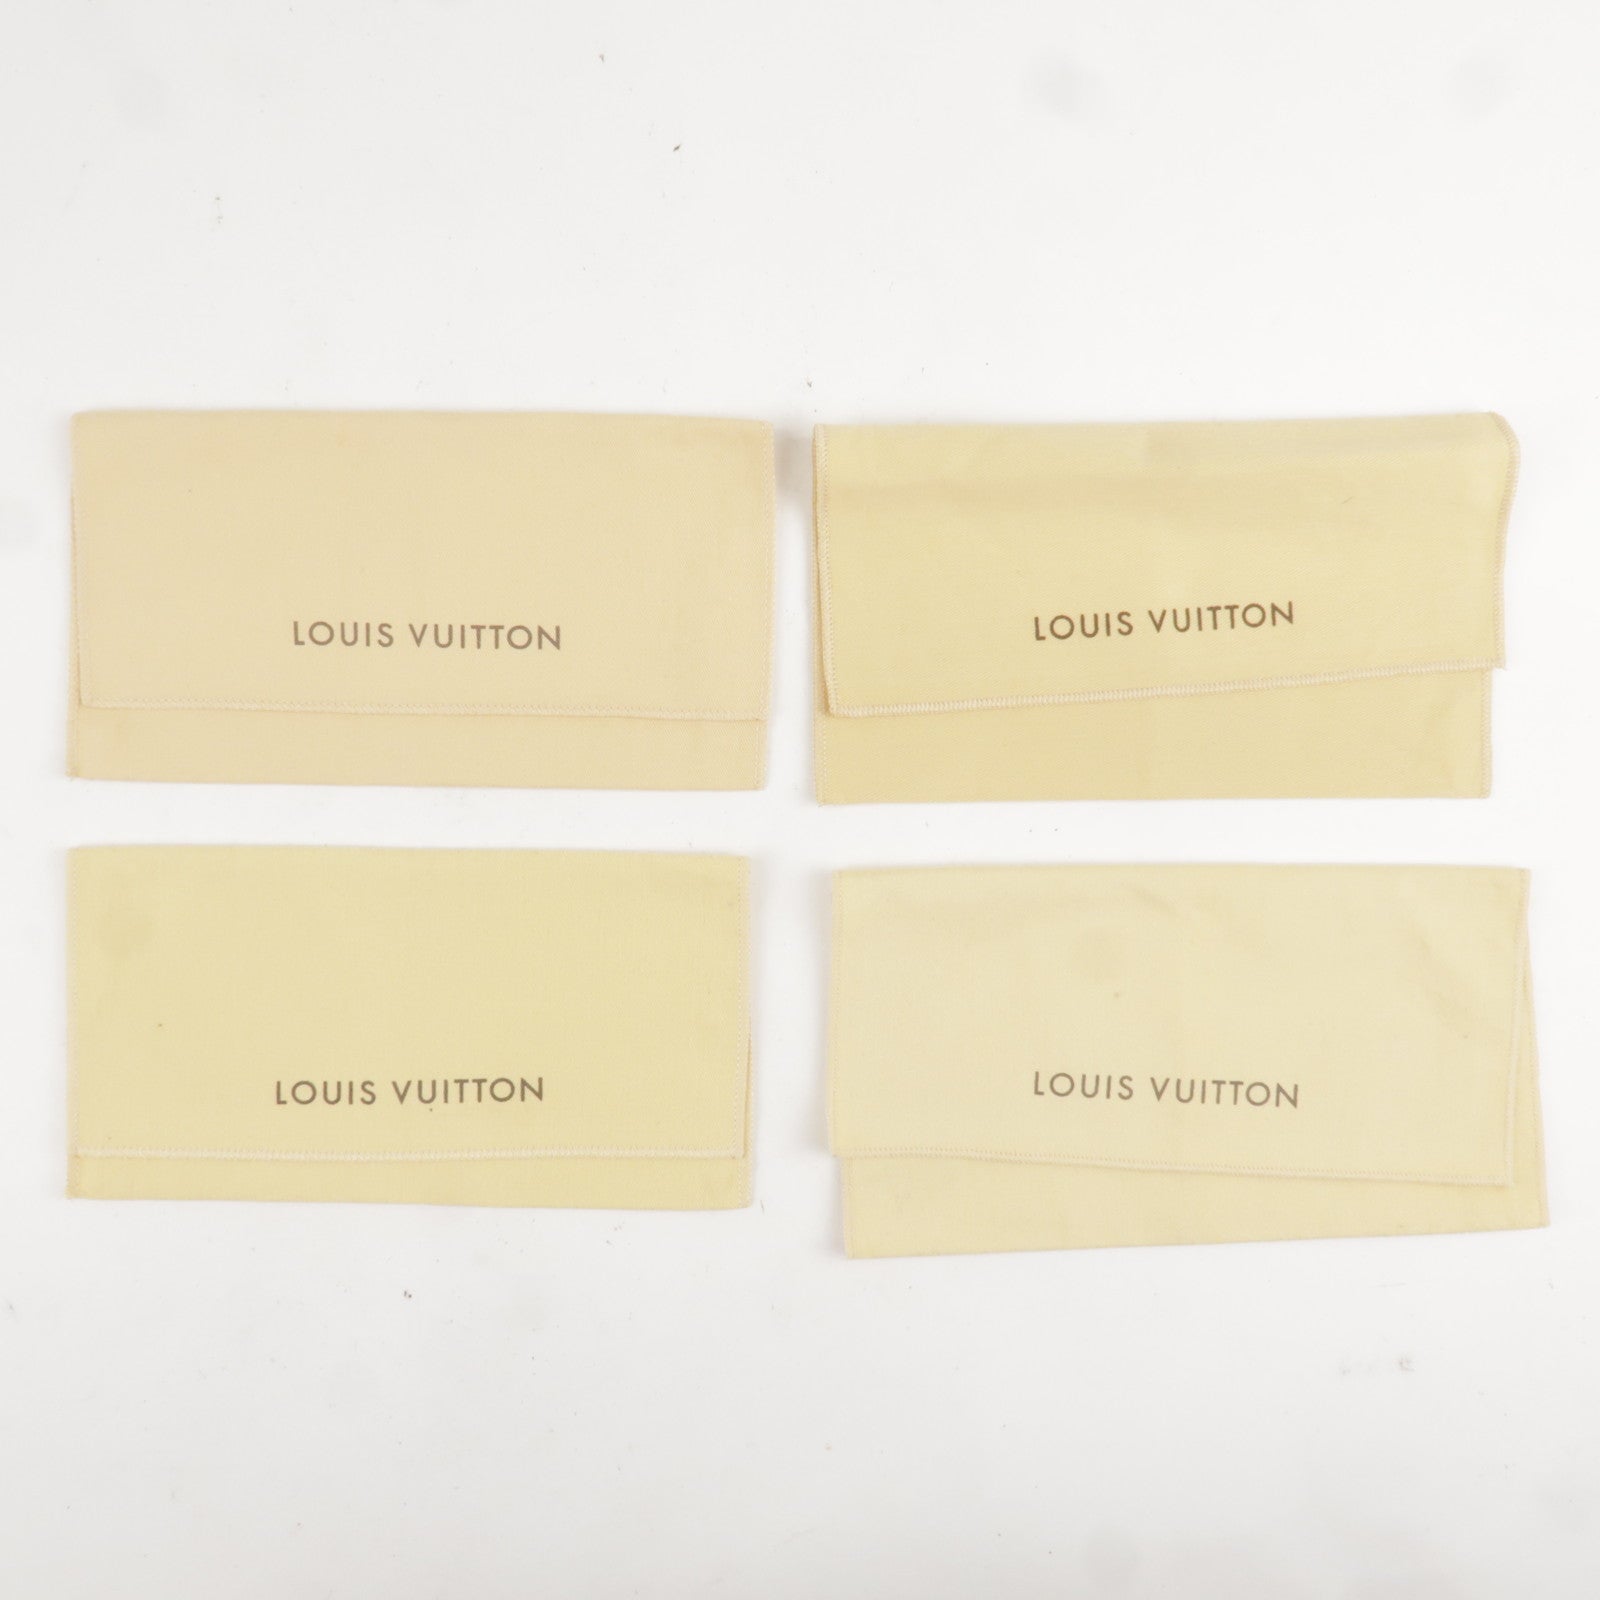 Louis Vuitton Small Dust Bag  Louis vuitton, Vuitton, Louis